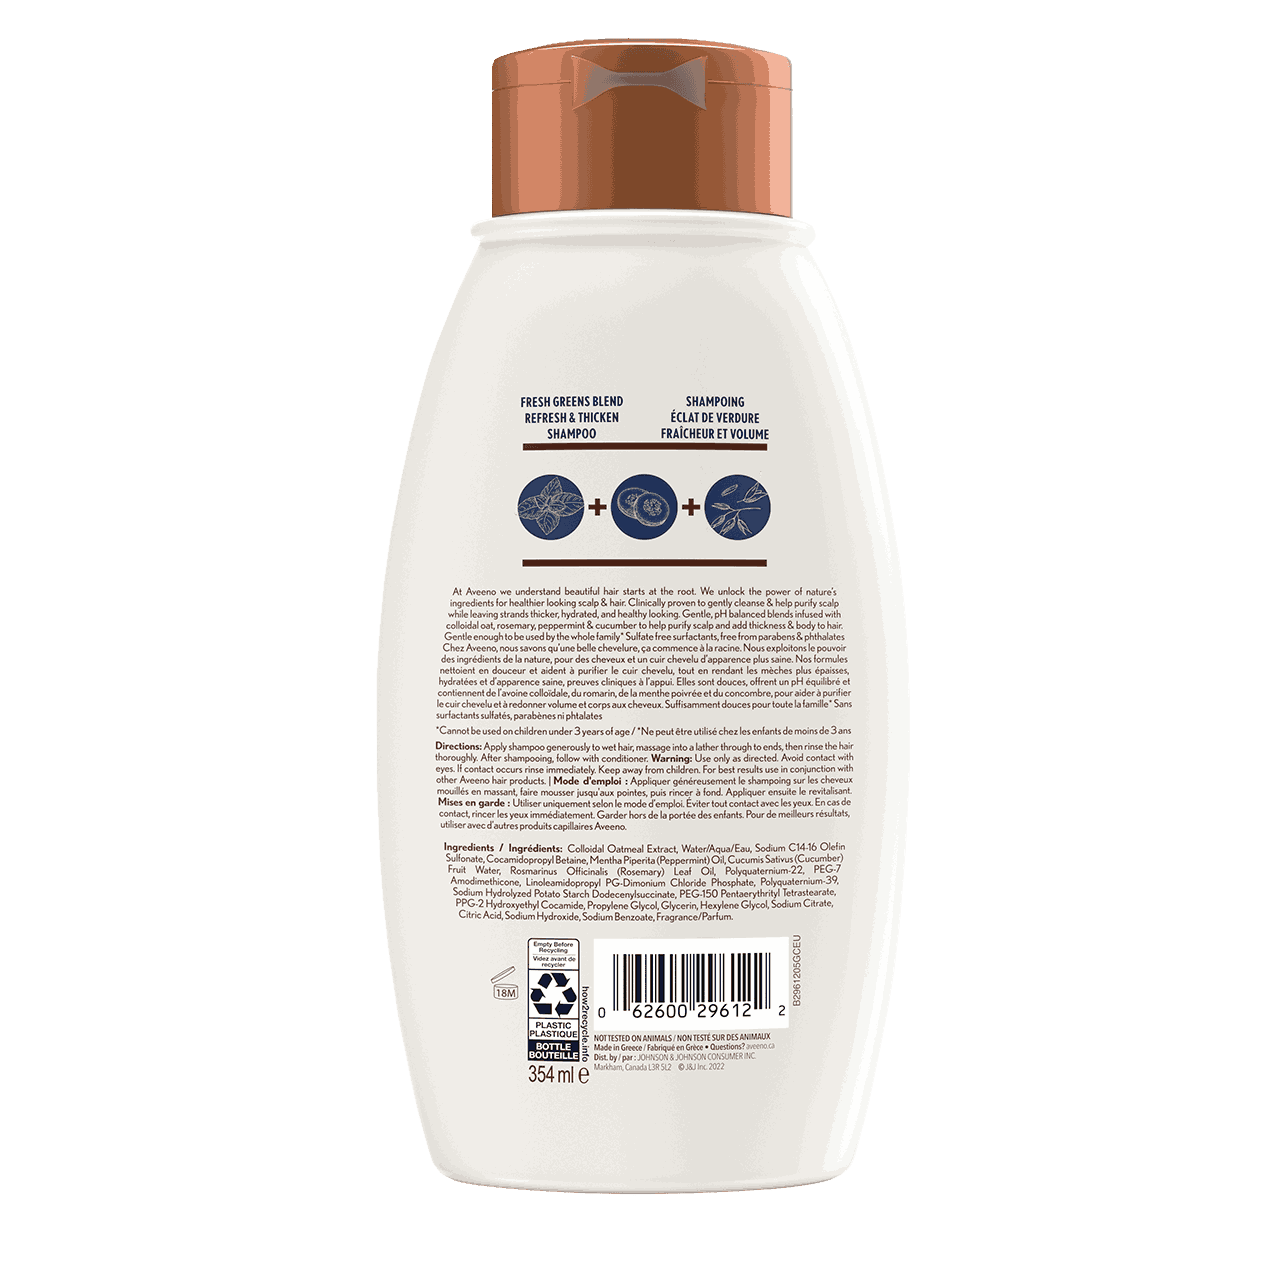 AVEENO® Fresh Greens Blend Shampoo, 354ml bottle, back label